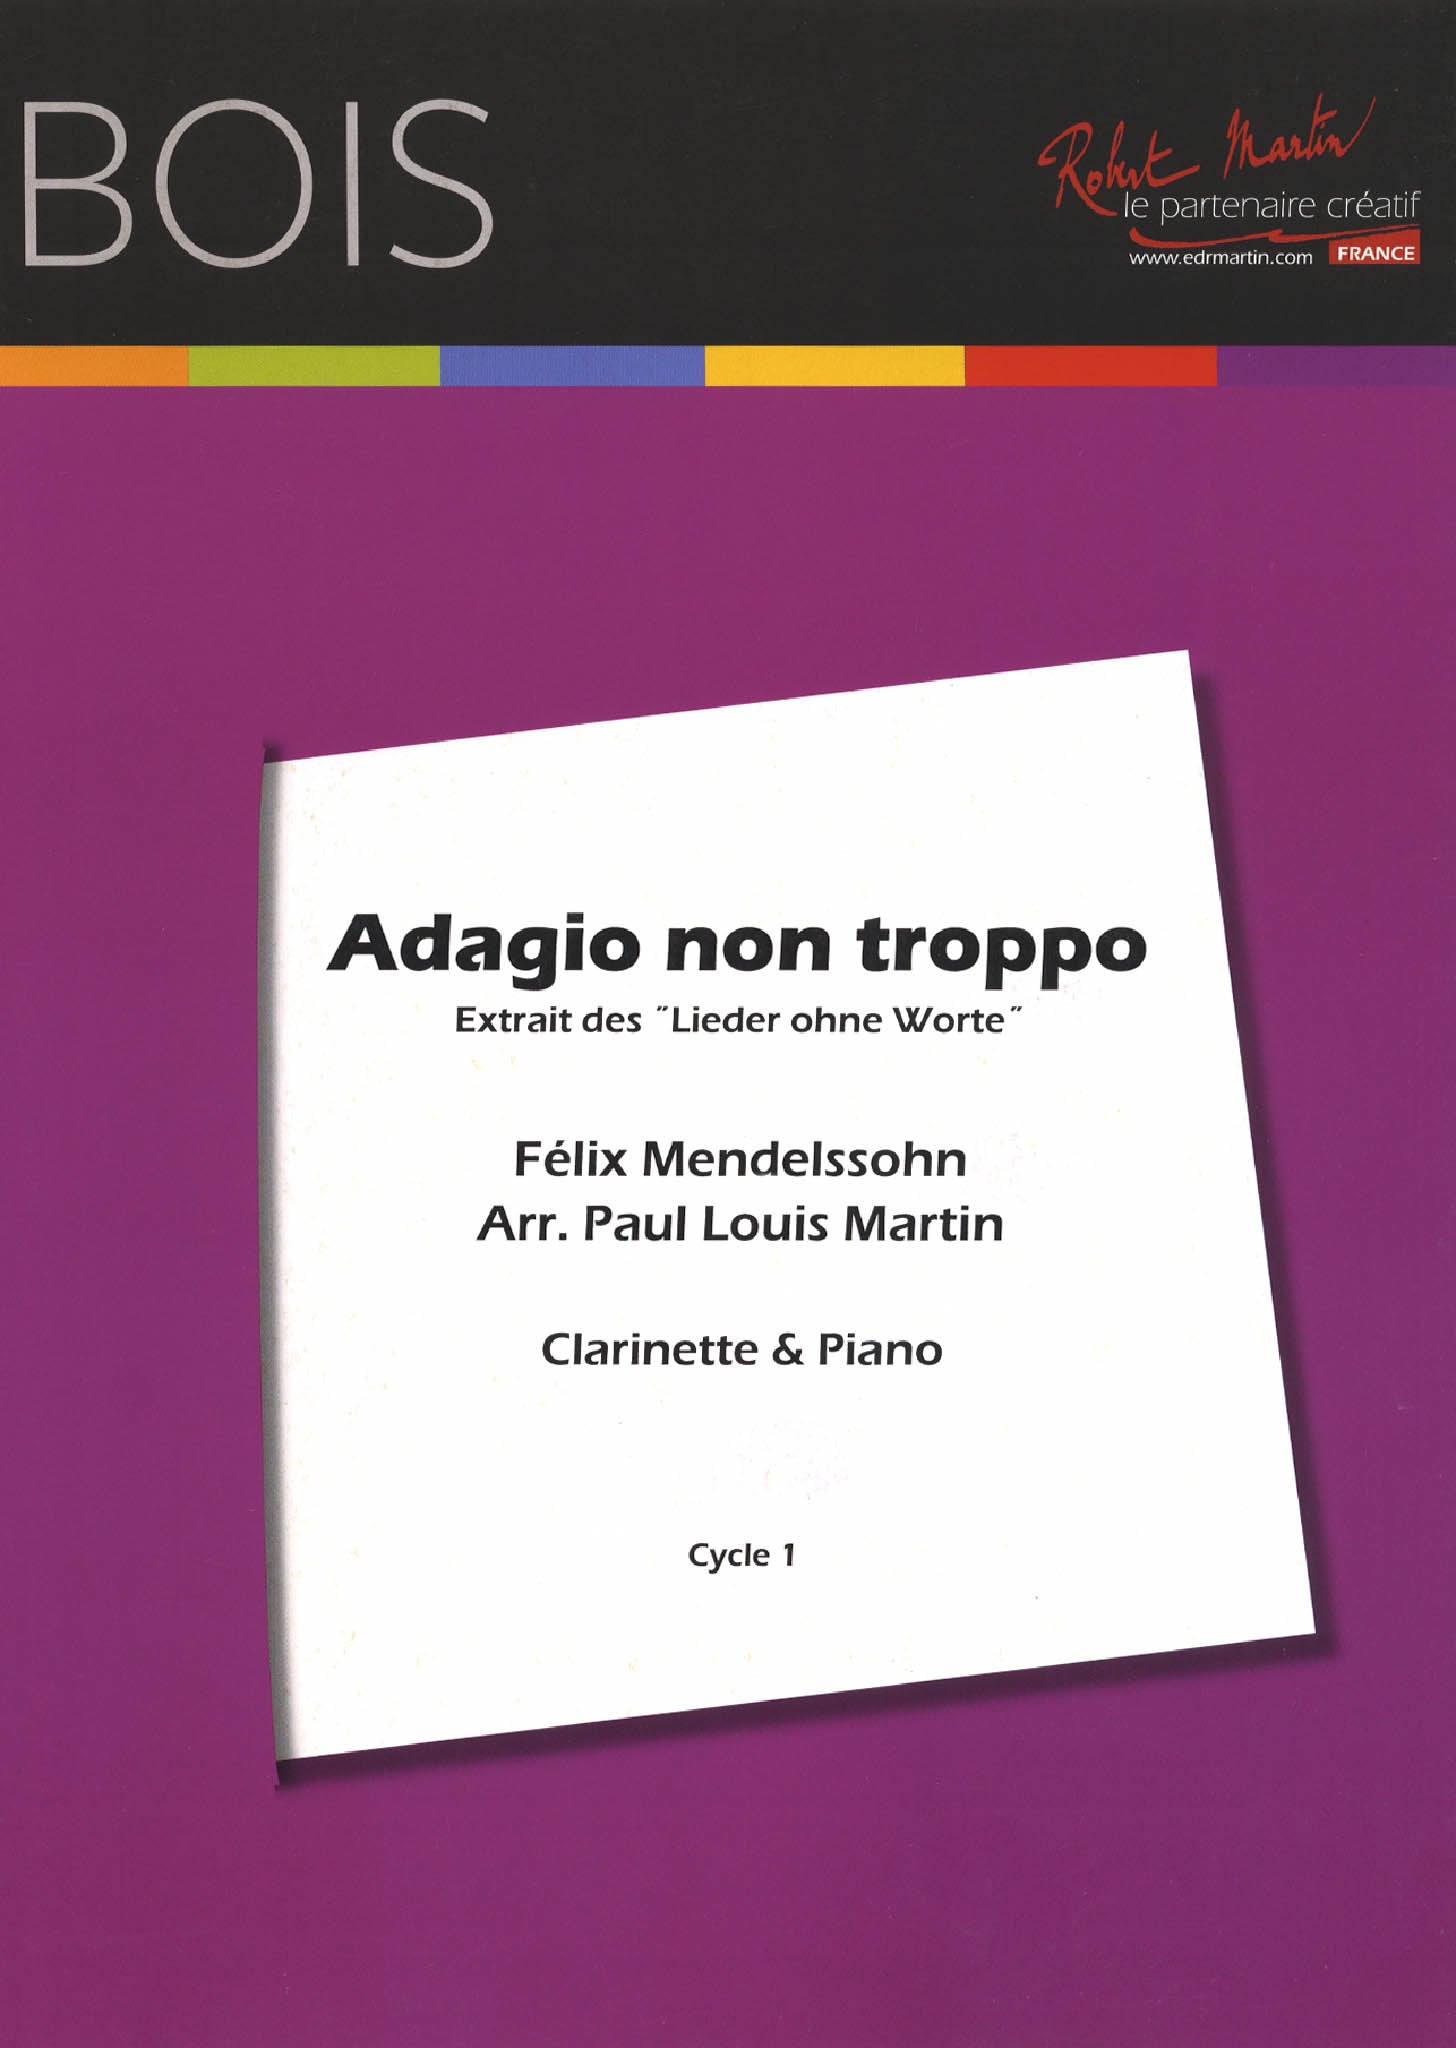 Adagio non troppo, from Lieder ohne Worte, Book 2, Op. 30 No. 3 clarinet piano arrangement cover